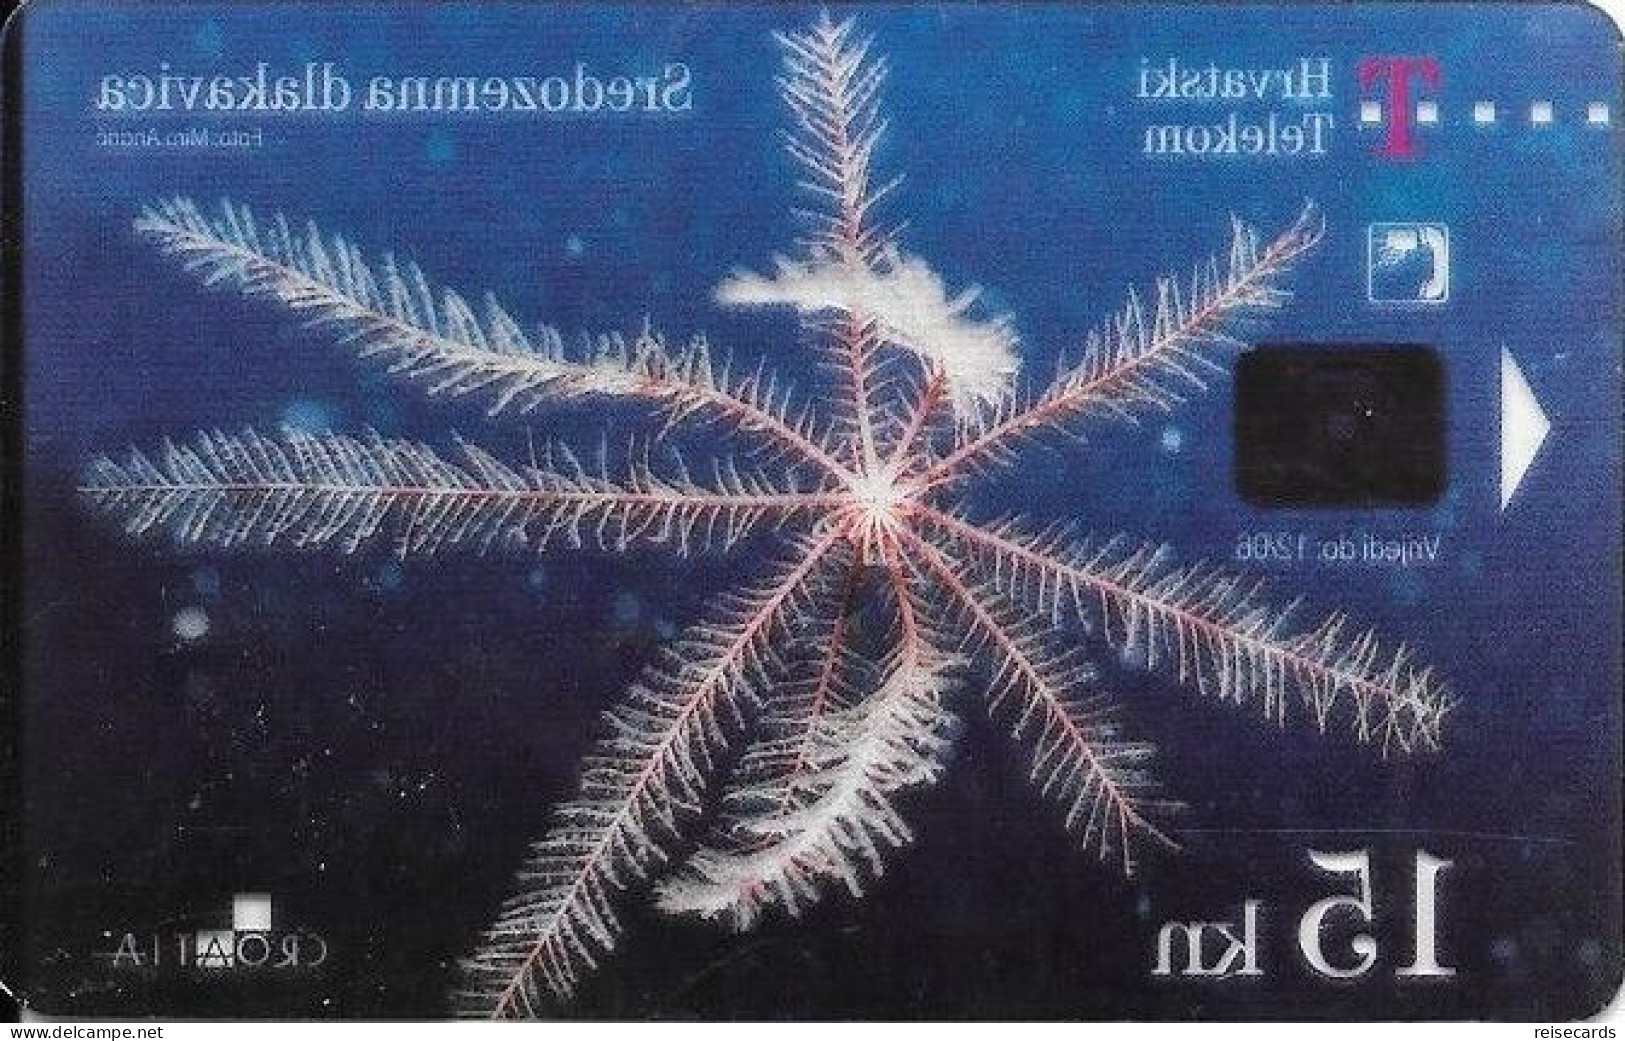 Croatia: Hrvatski Telekom - Underwater World, Sredozemna Dlakavica . Transparent - Croacia